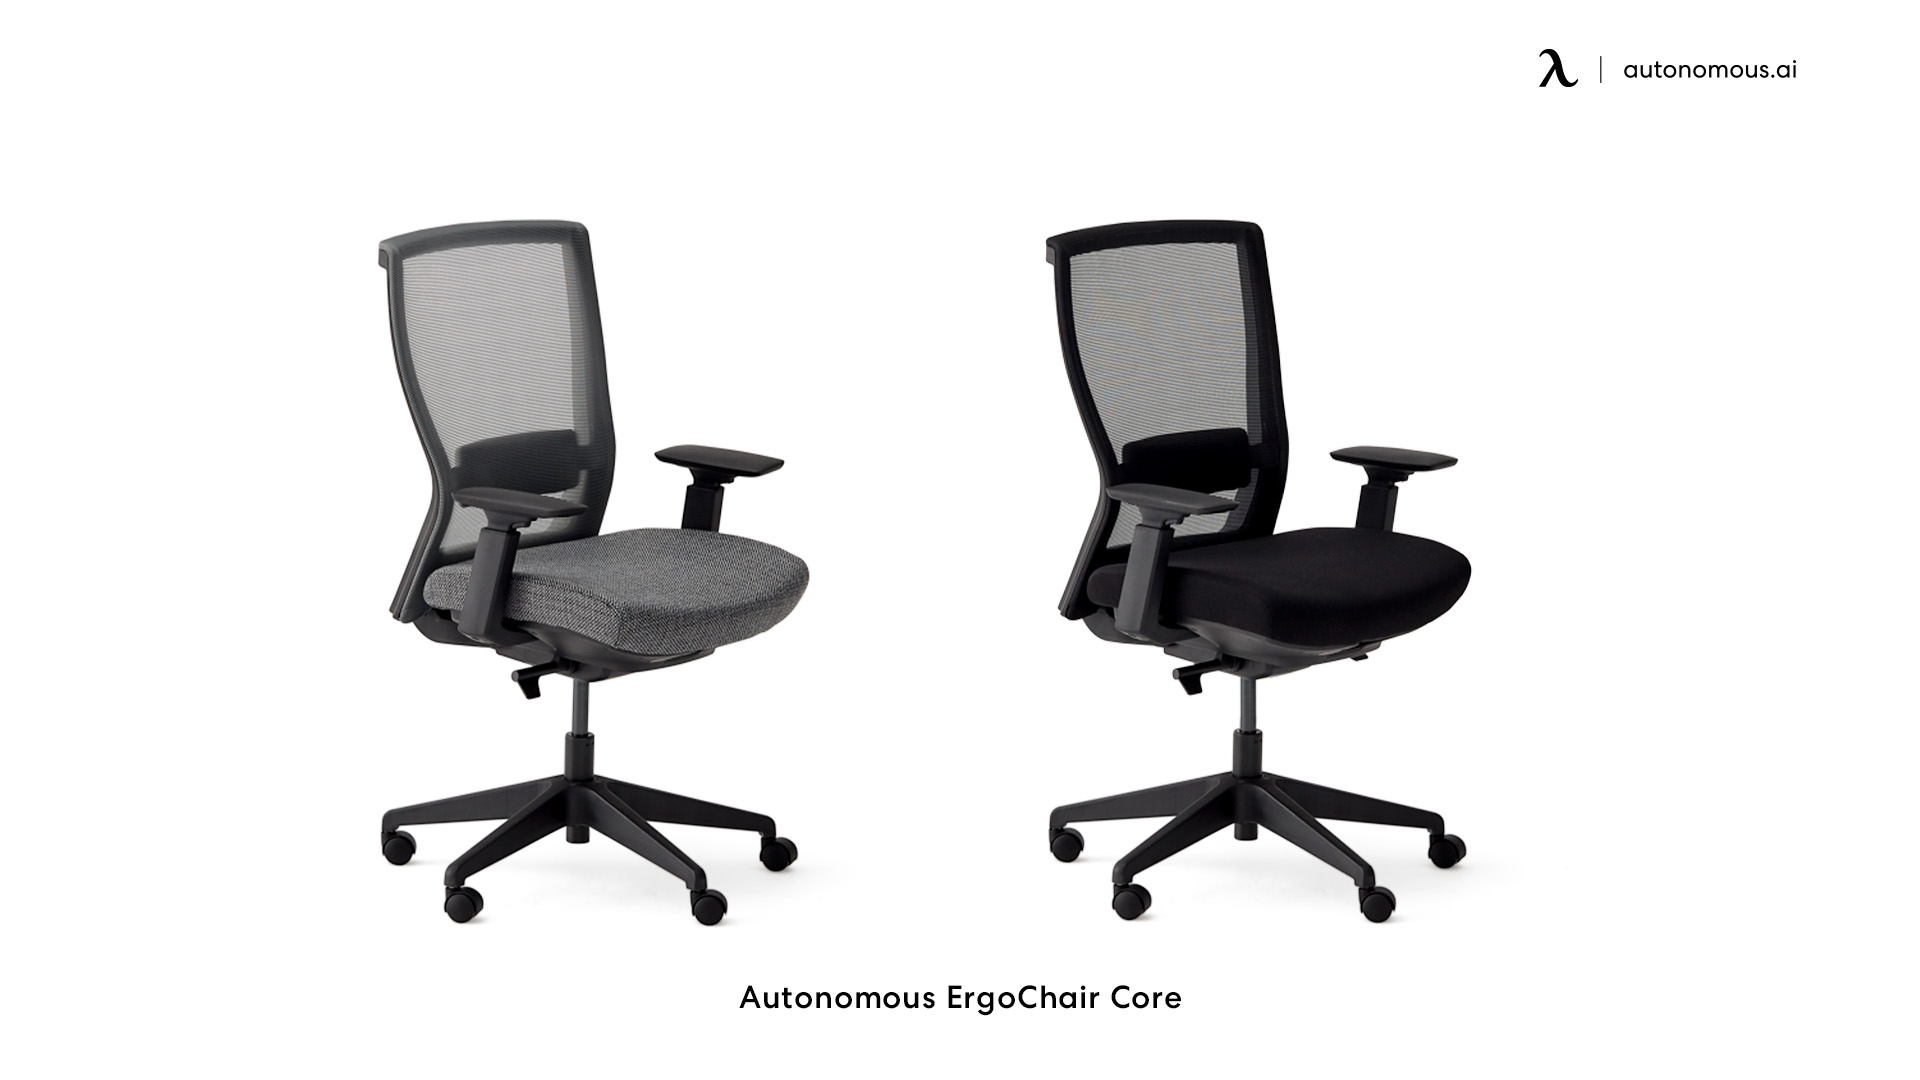 ErgoChair Core home office chair with wheels